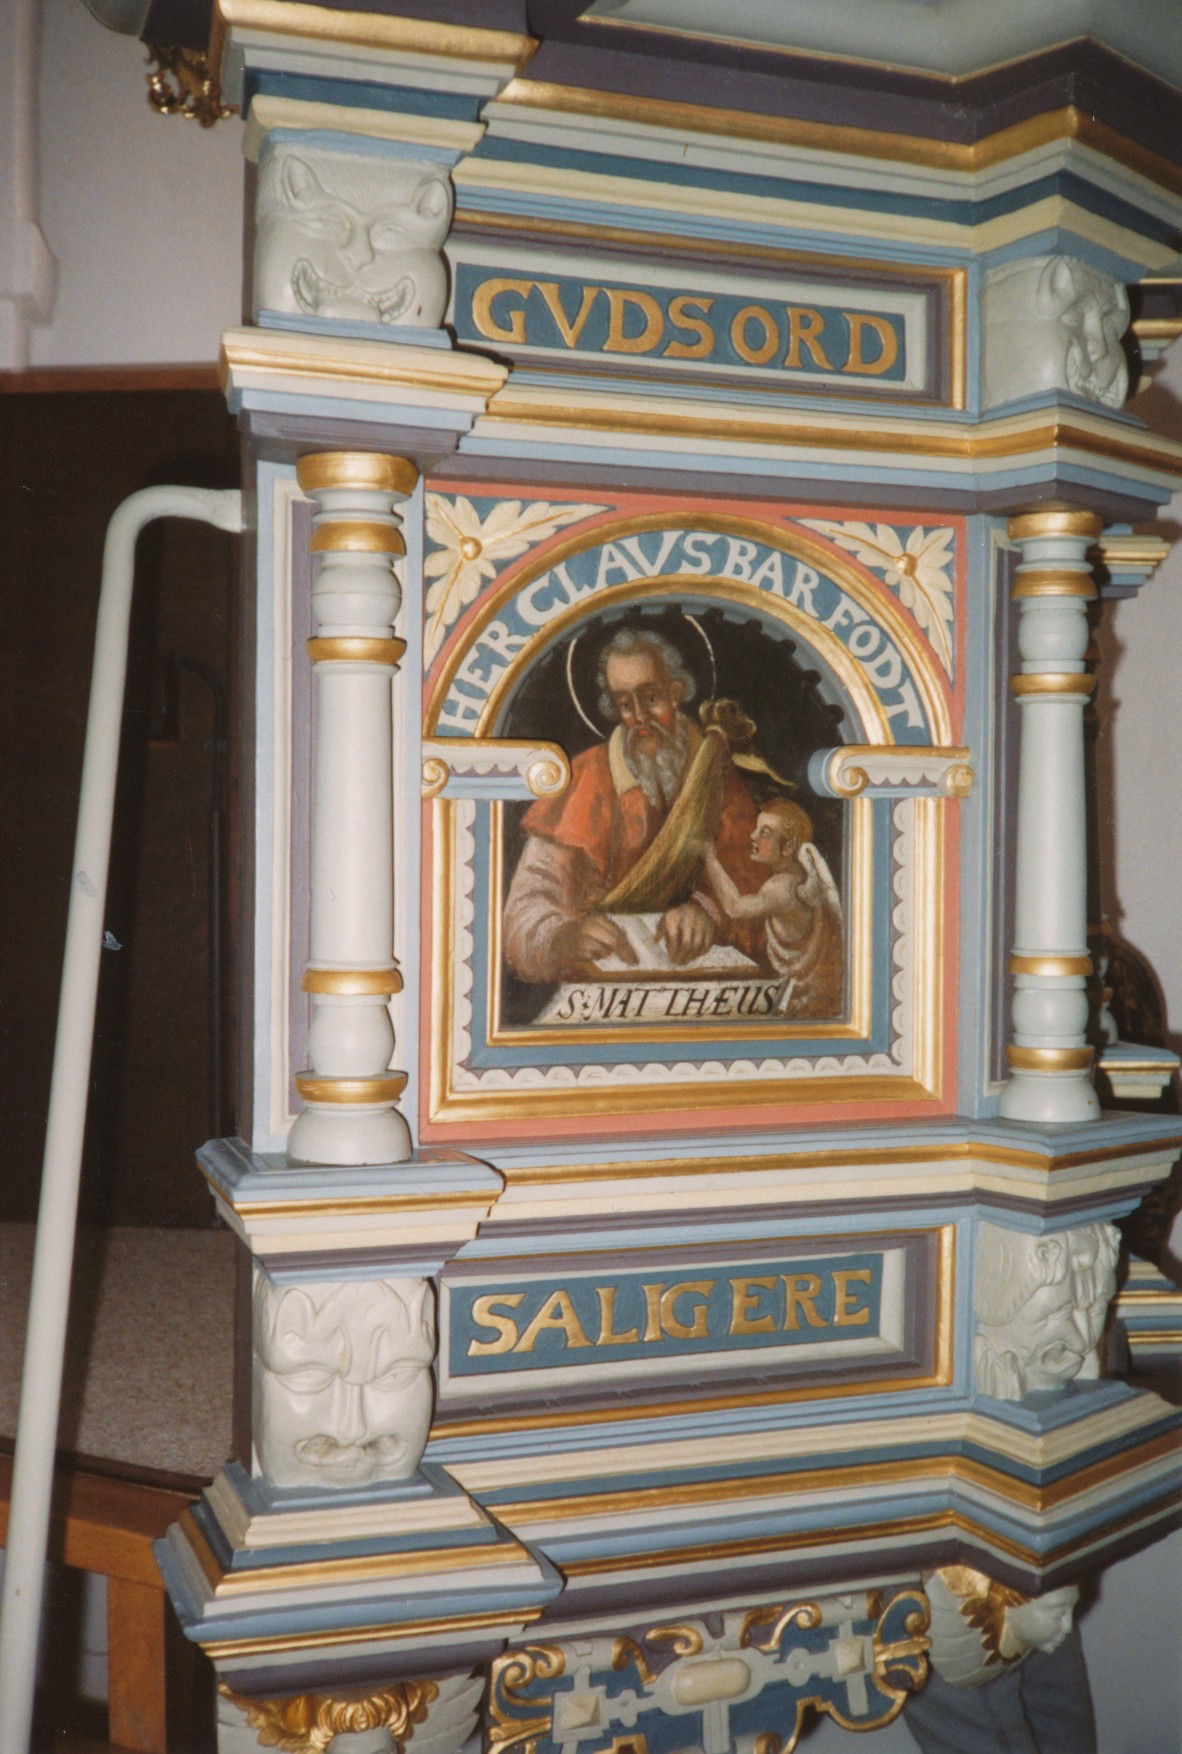 Prædikestolen i Sneum kirke med Claus Barfods navn